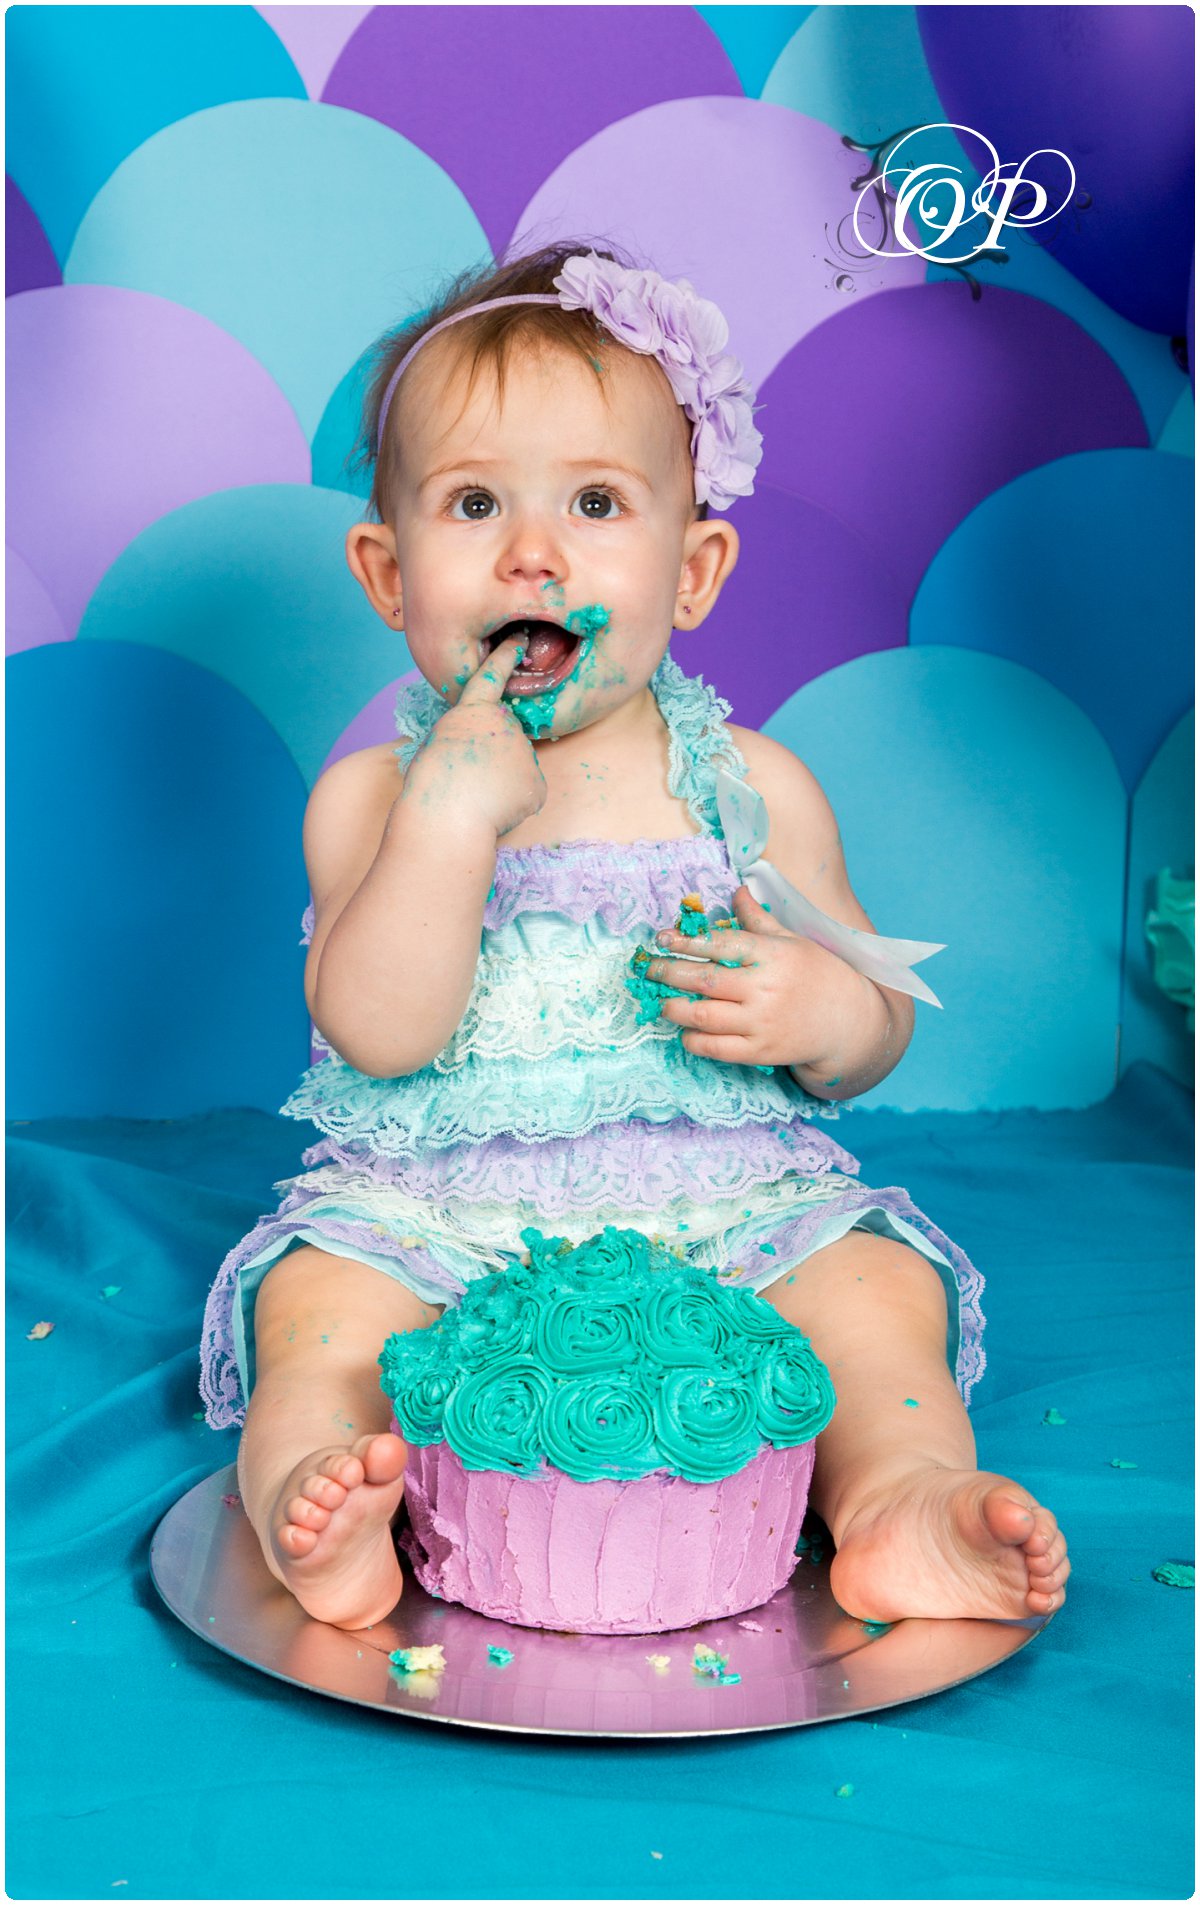 Mikayla smash the cake shoot…. she is 1!